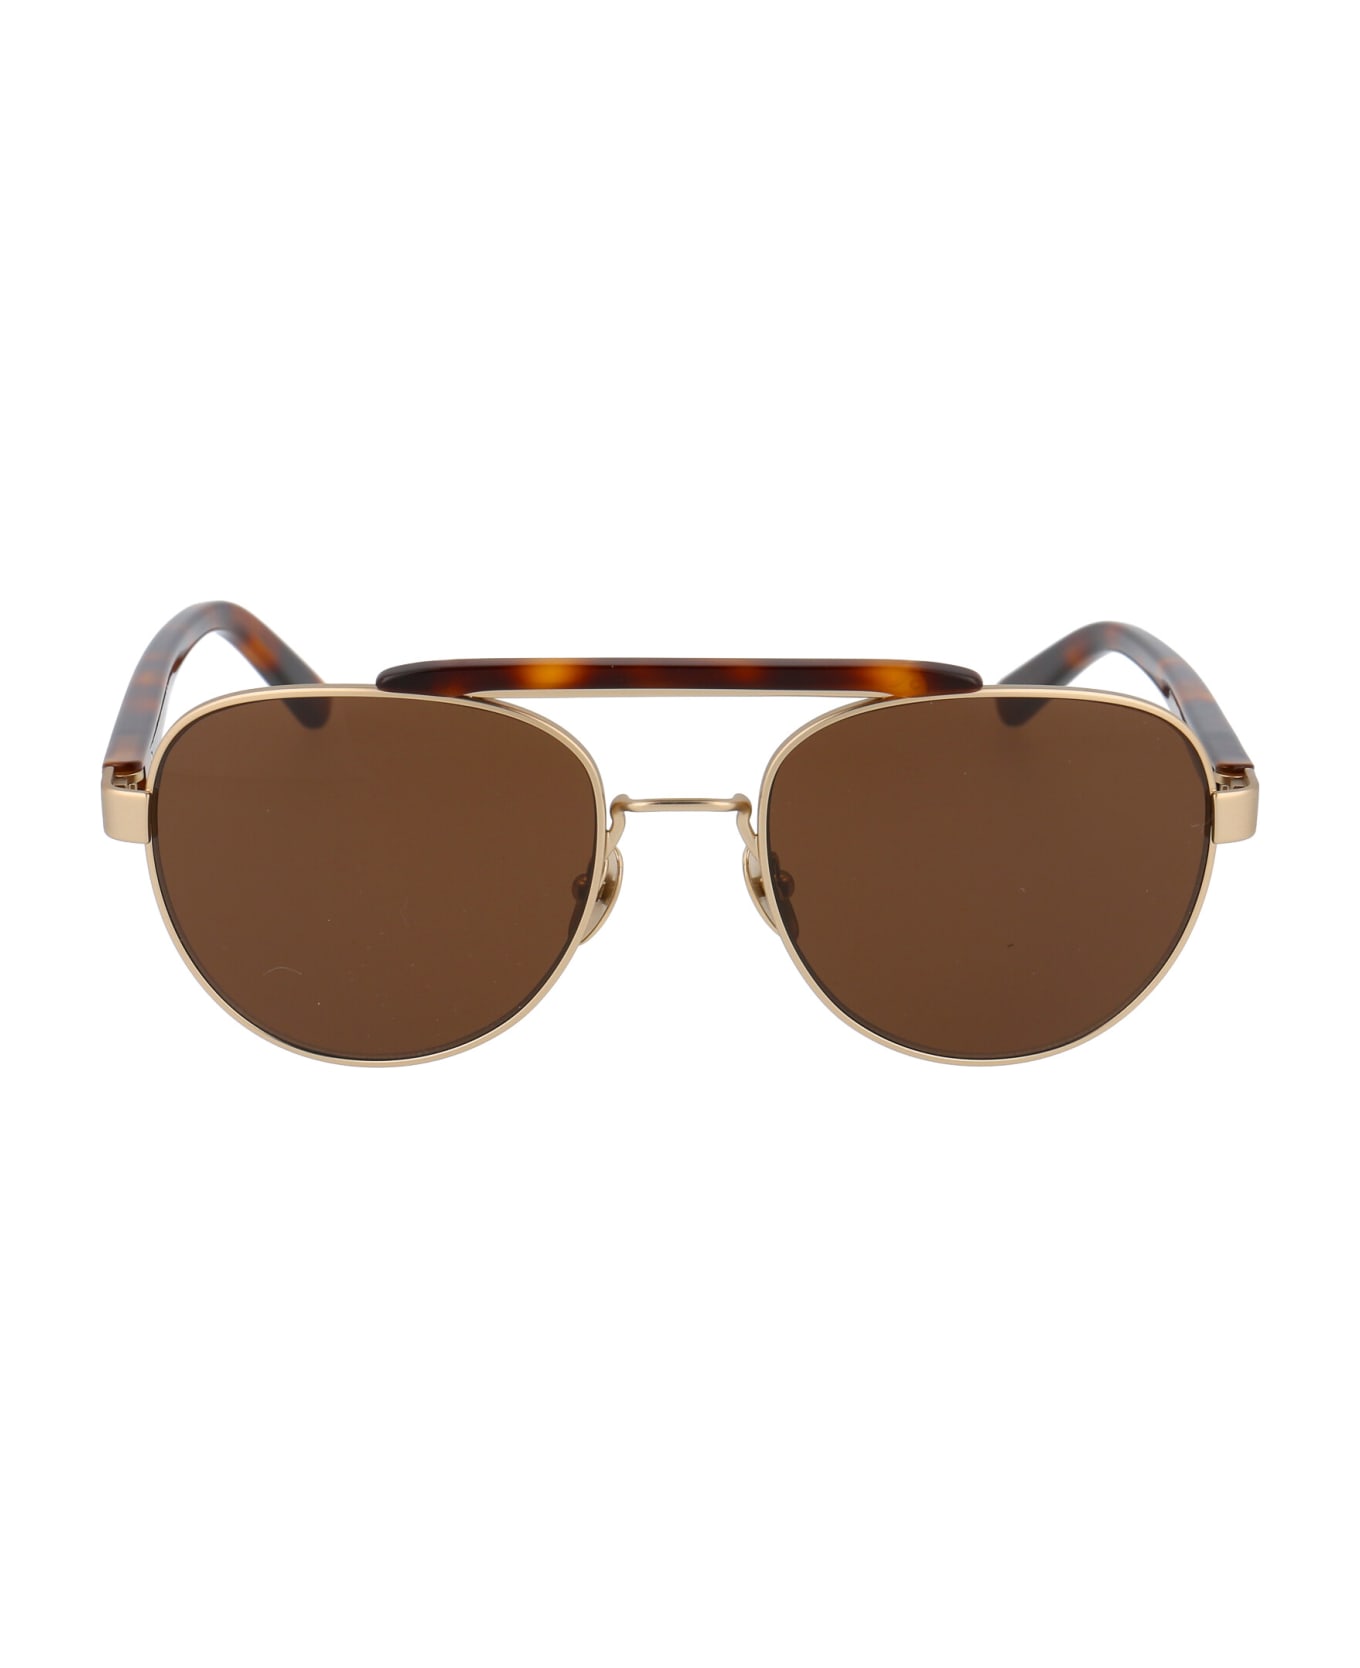 Calvin Klein Ck19306s Sunglasses - 240 SOFT TORTOISE サングラス